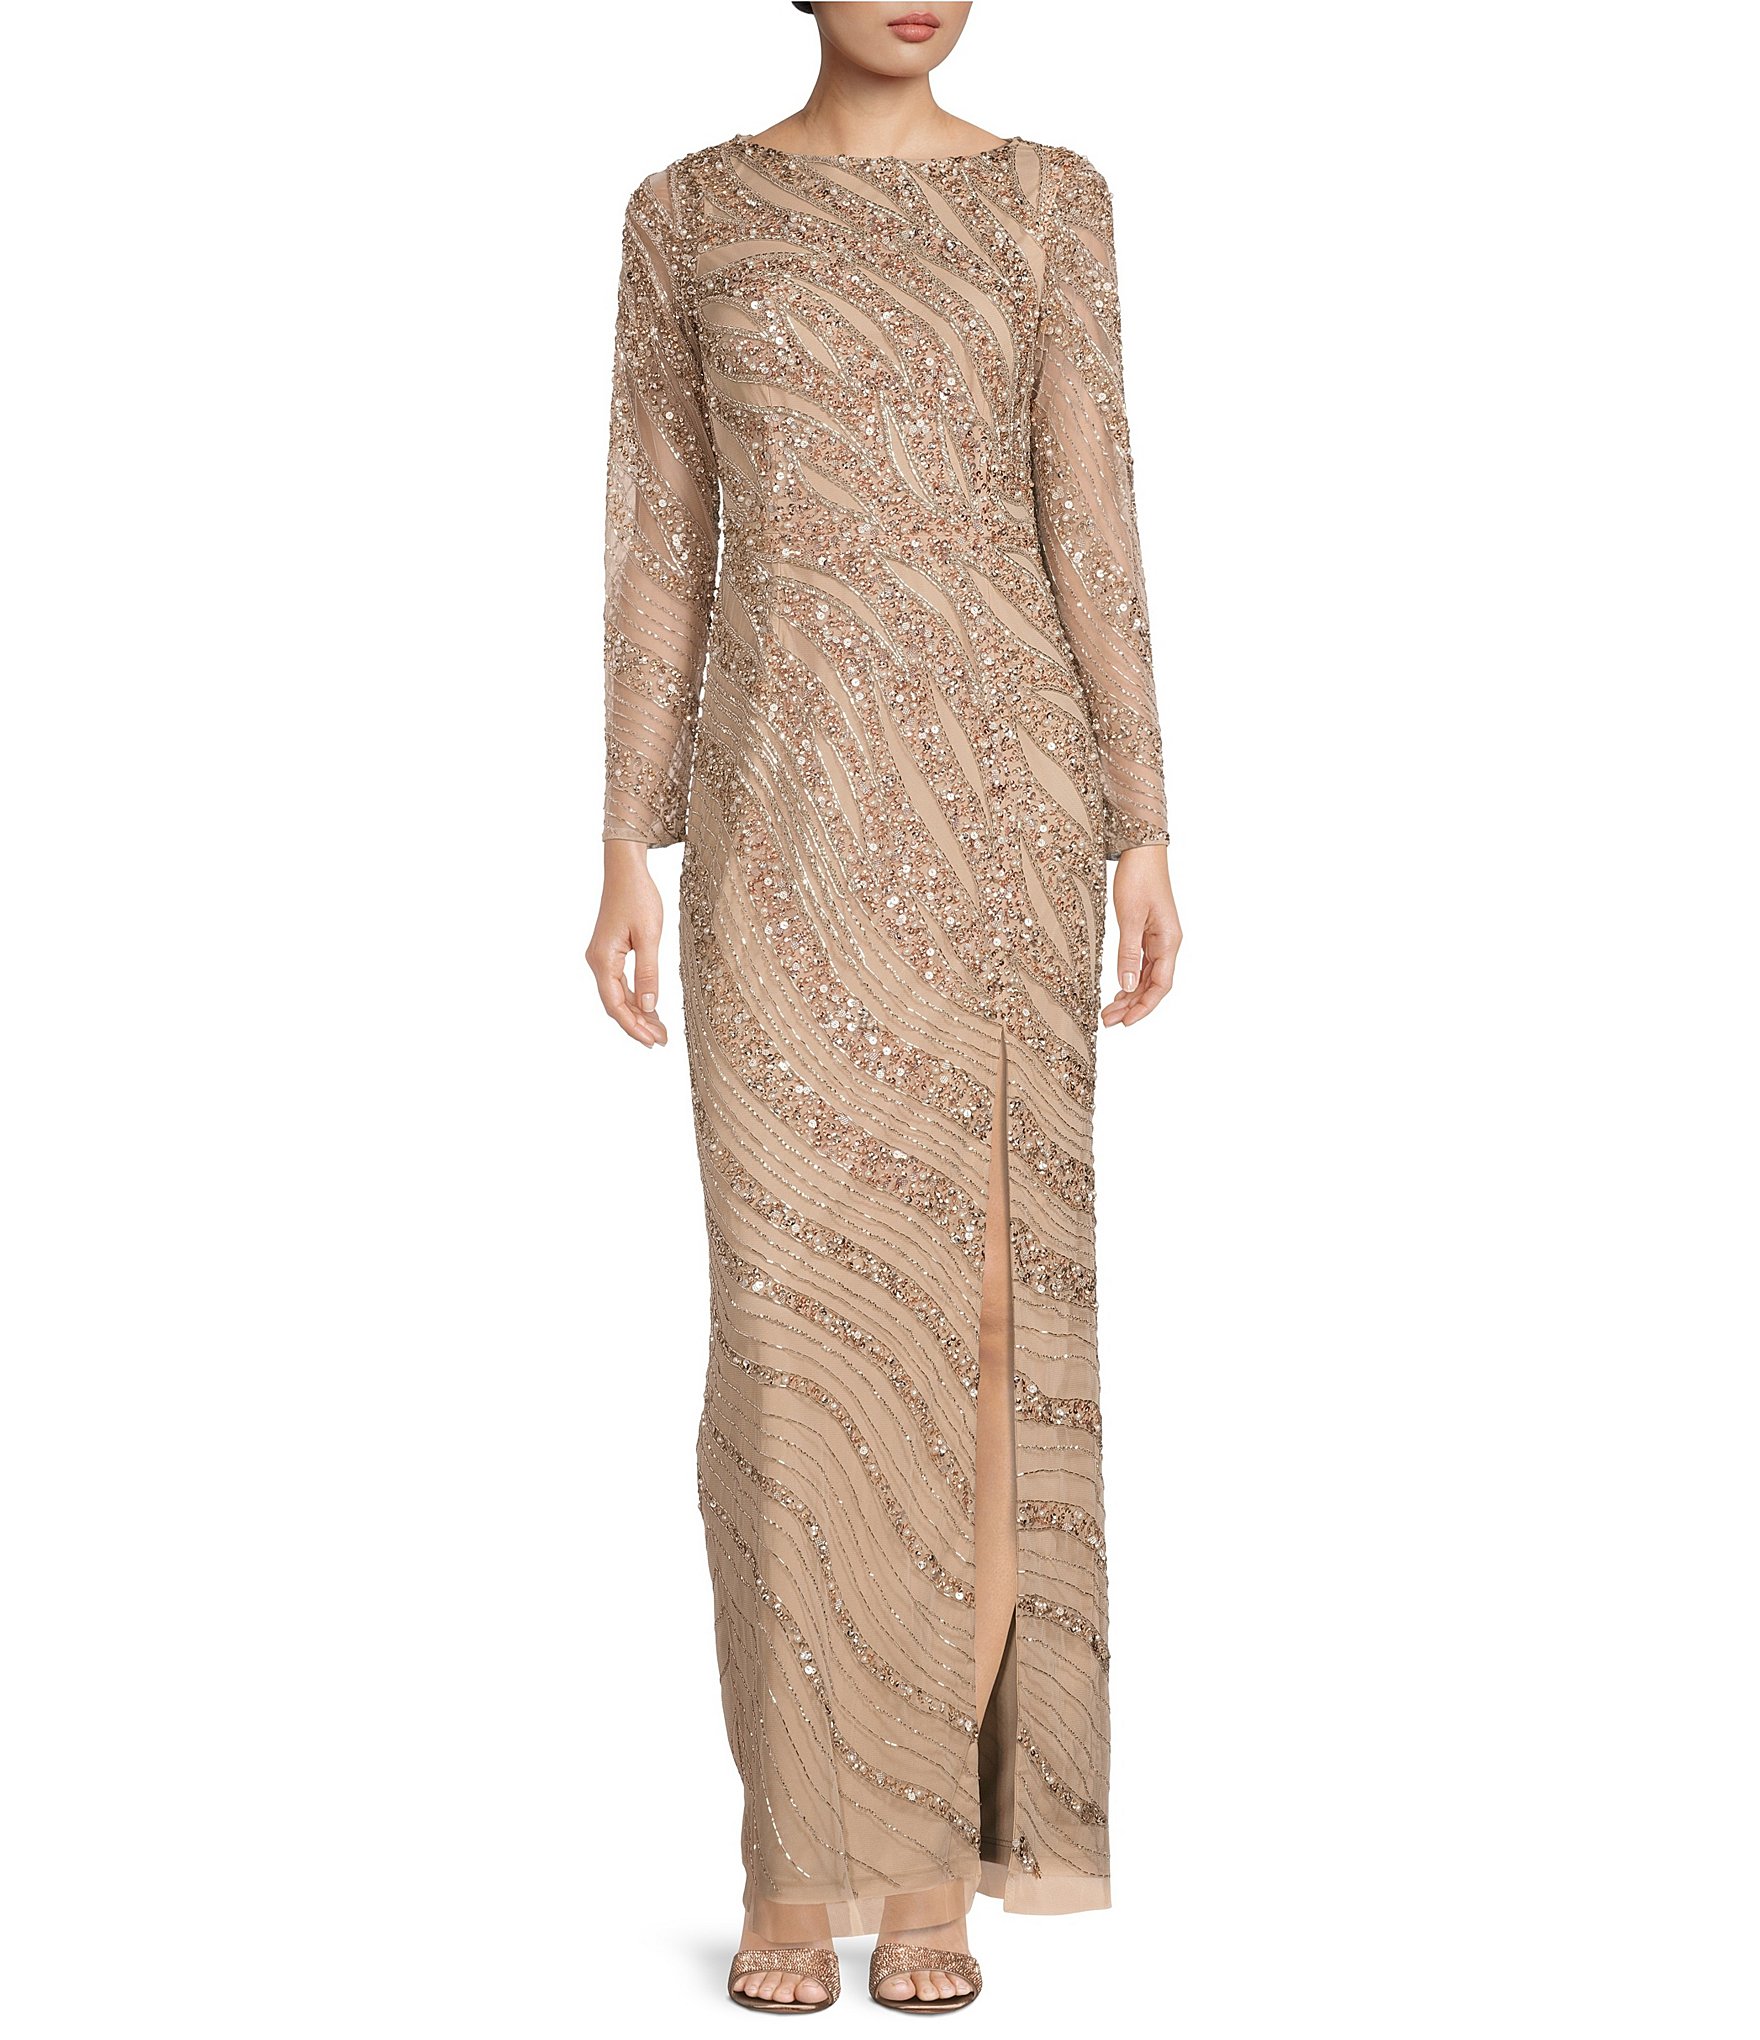 pleated: Women's Formal Dresses & Evening Gowns | Dillard's